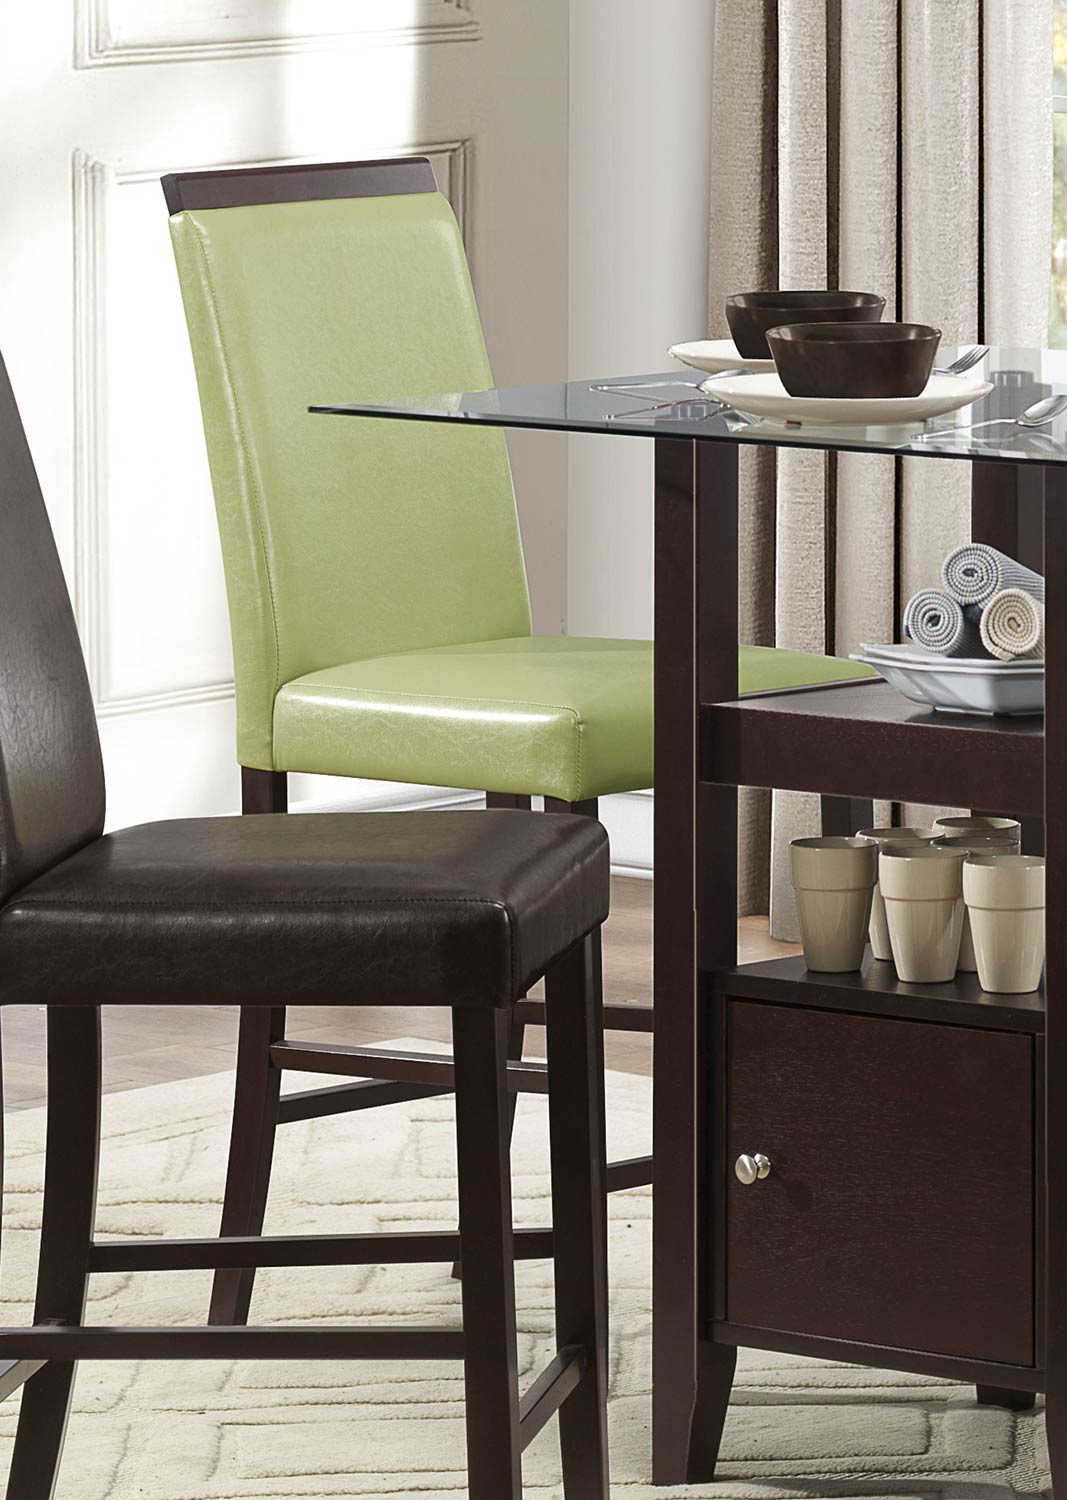 Homelegance Bari Counter Height Chair - Lime Green